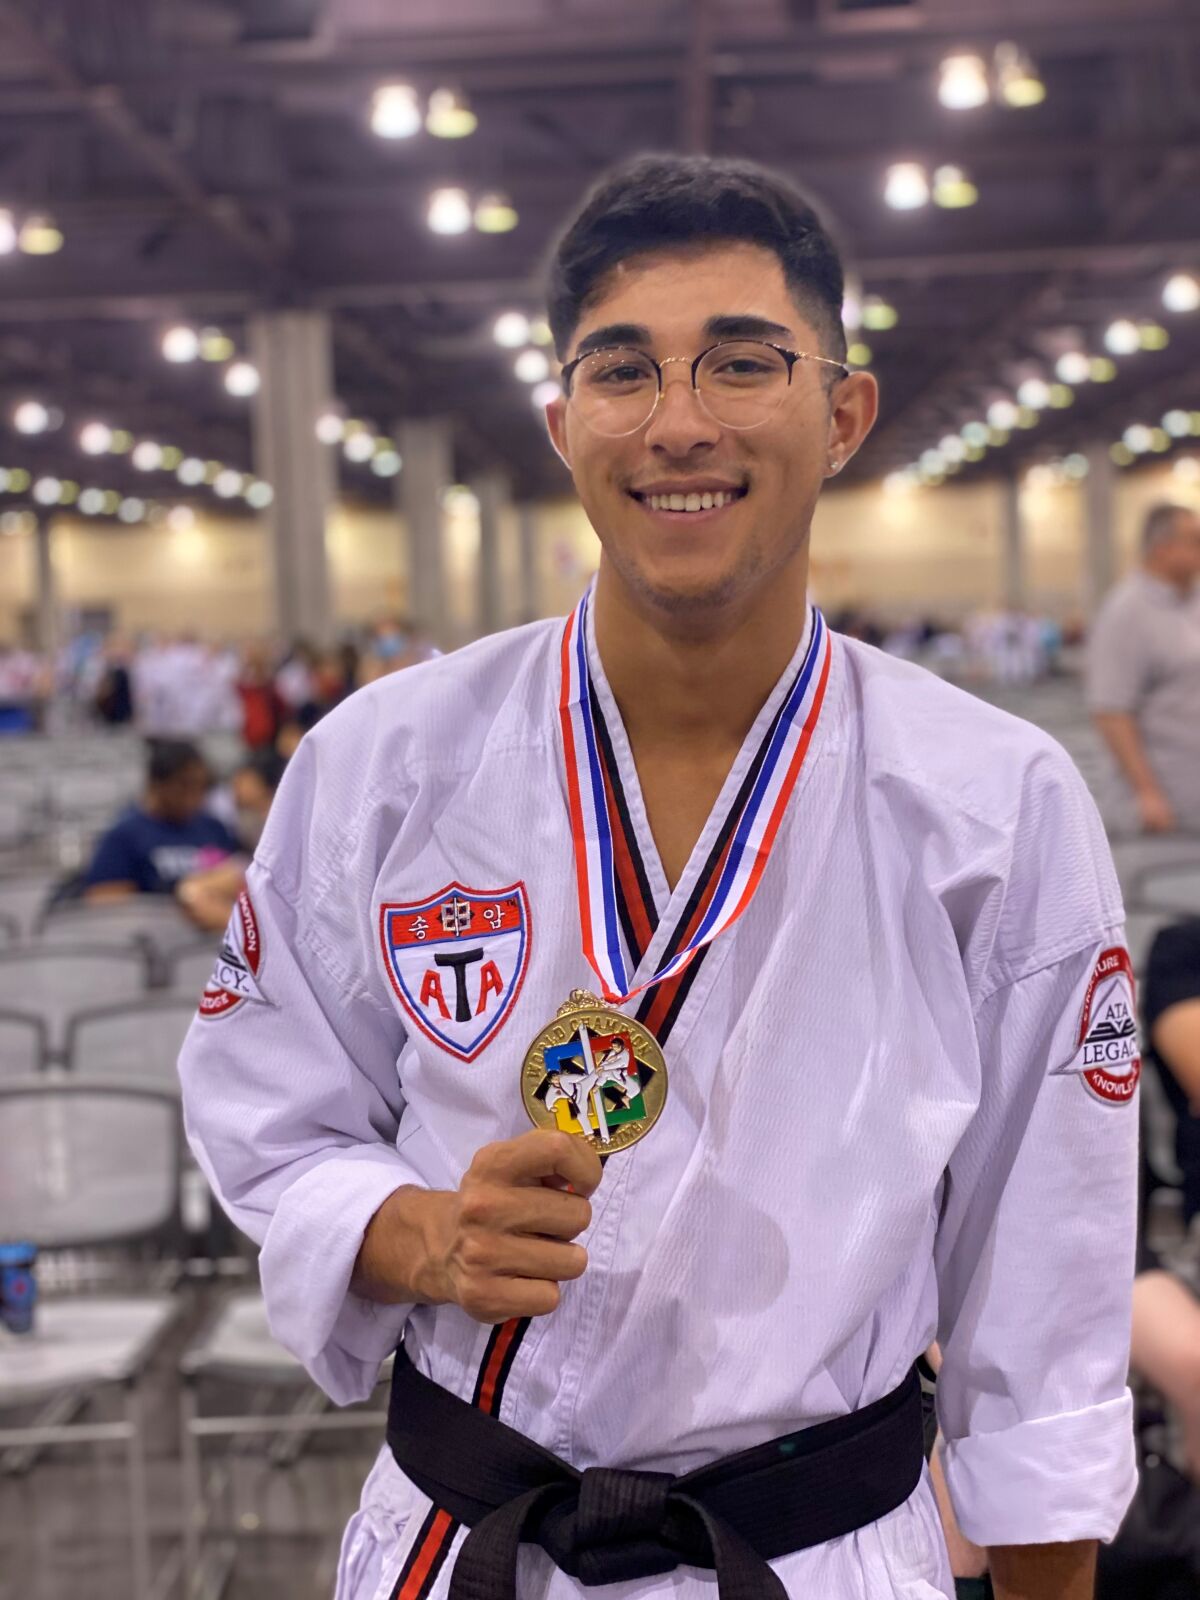 Andrew Heiati won his third straight championship at the ATA World Taekwondo Championships in Phoenix.